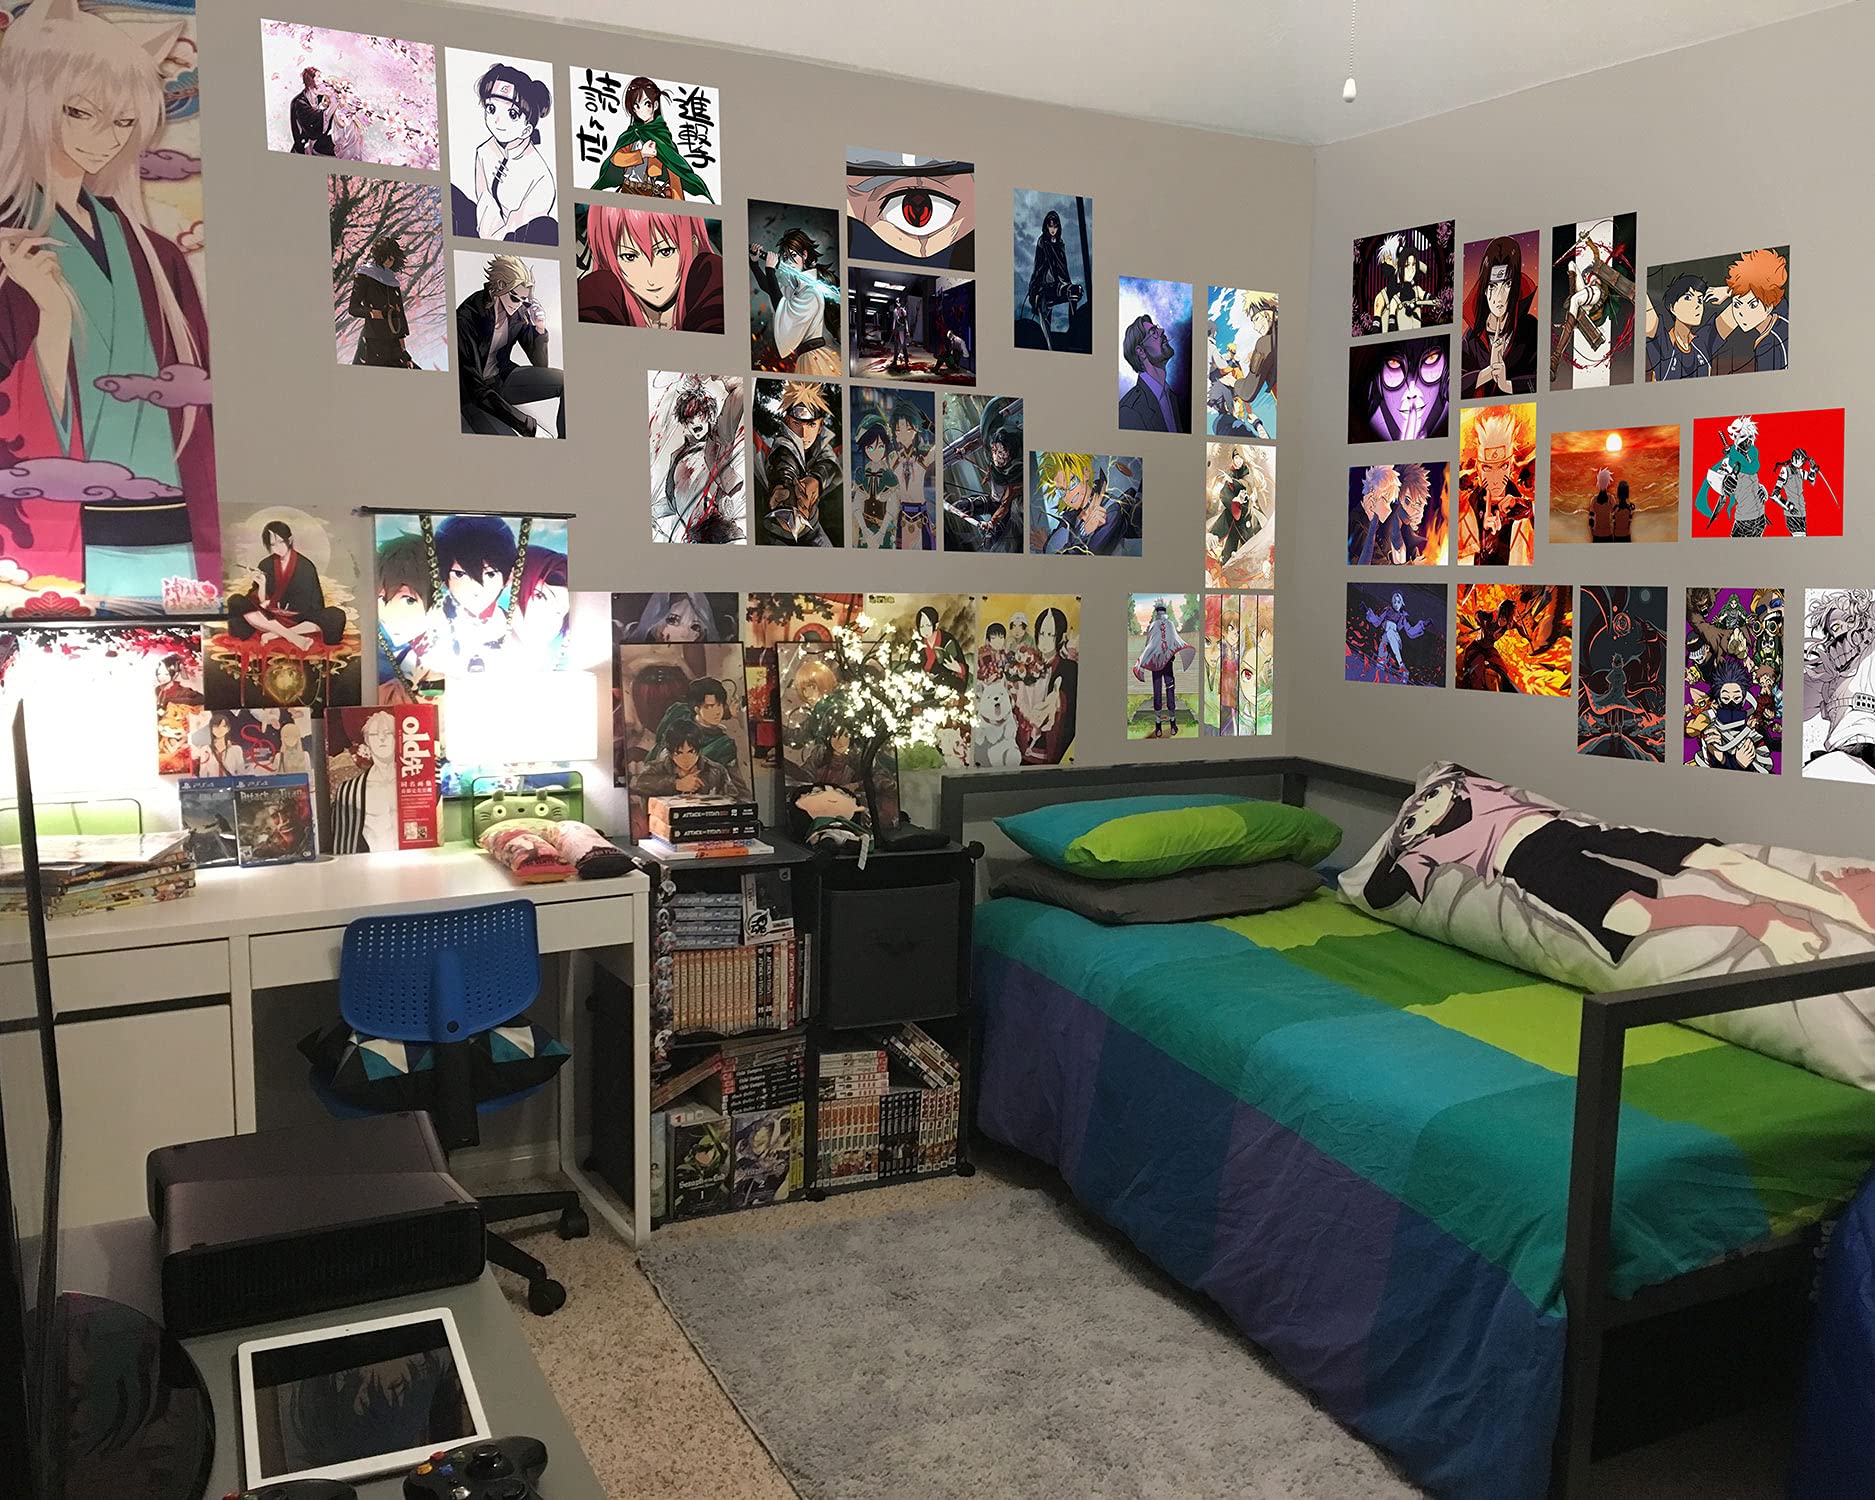 Mua Anime room decor, anime posters. Anime wall decor, poster pack for  manga wall. Anime prints wall collage. Japan anime room decor aesthetic. 50  Set 4x6 inch Photo Collections. trên Amazon Mỹ